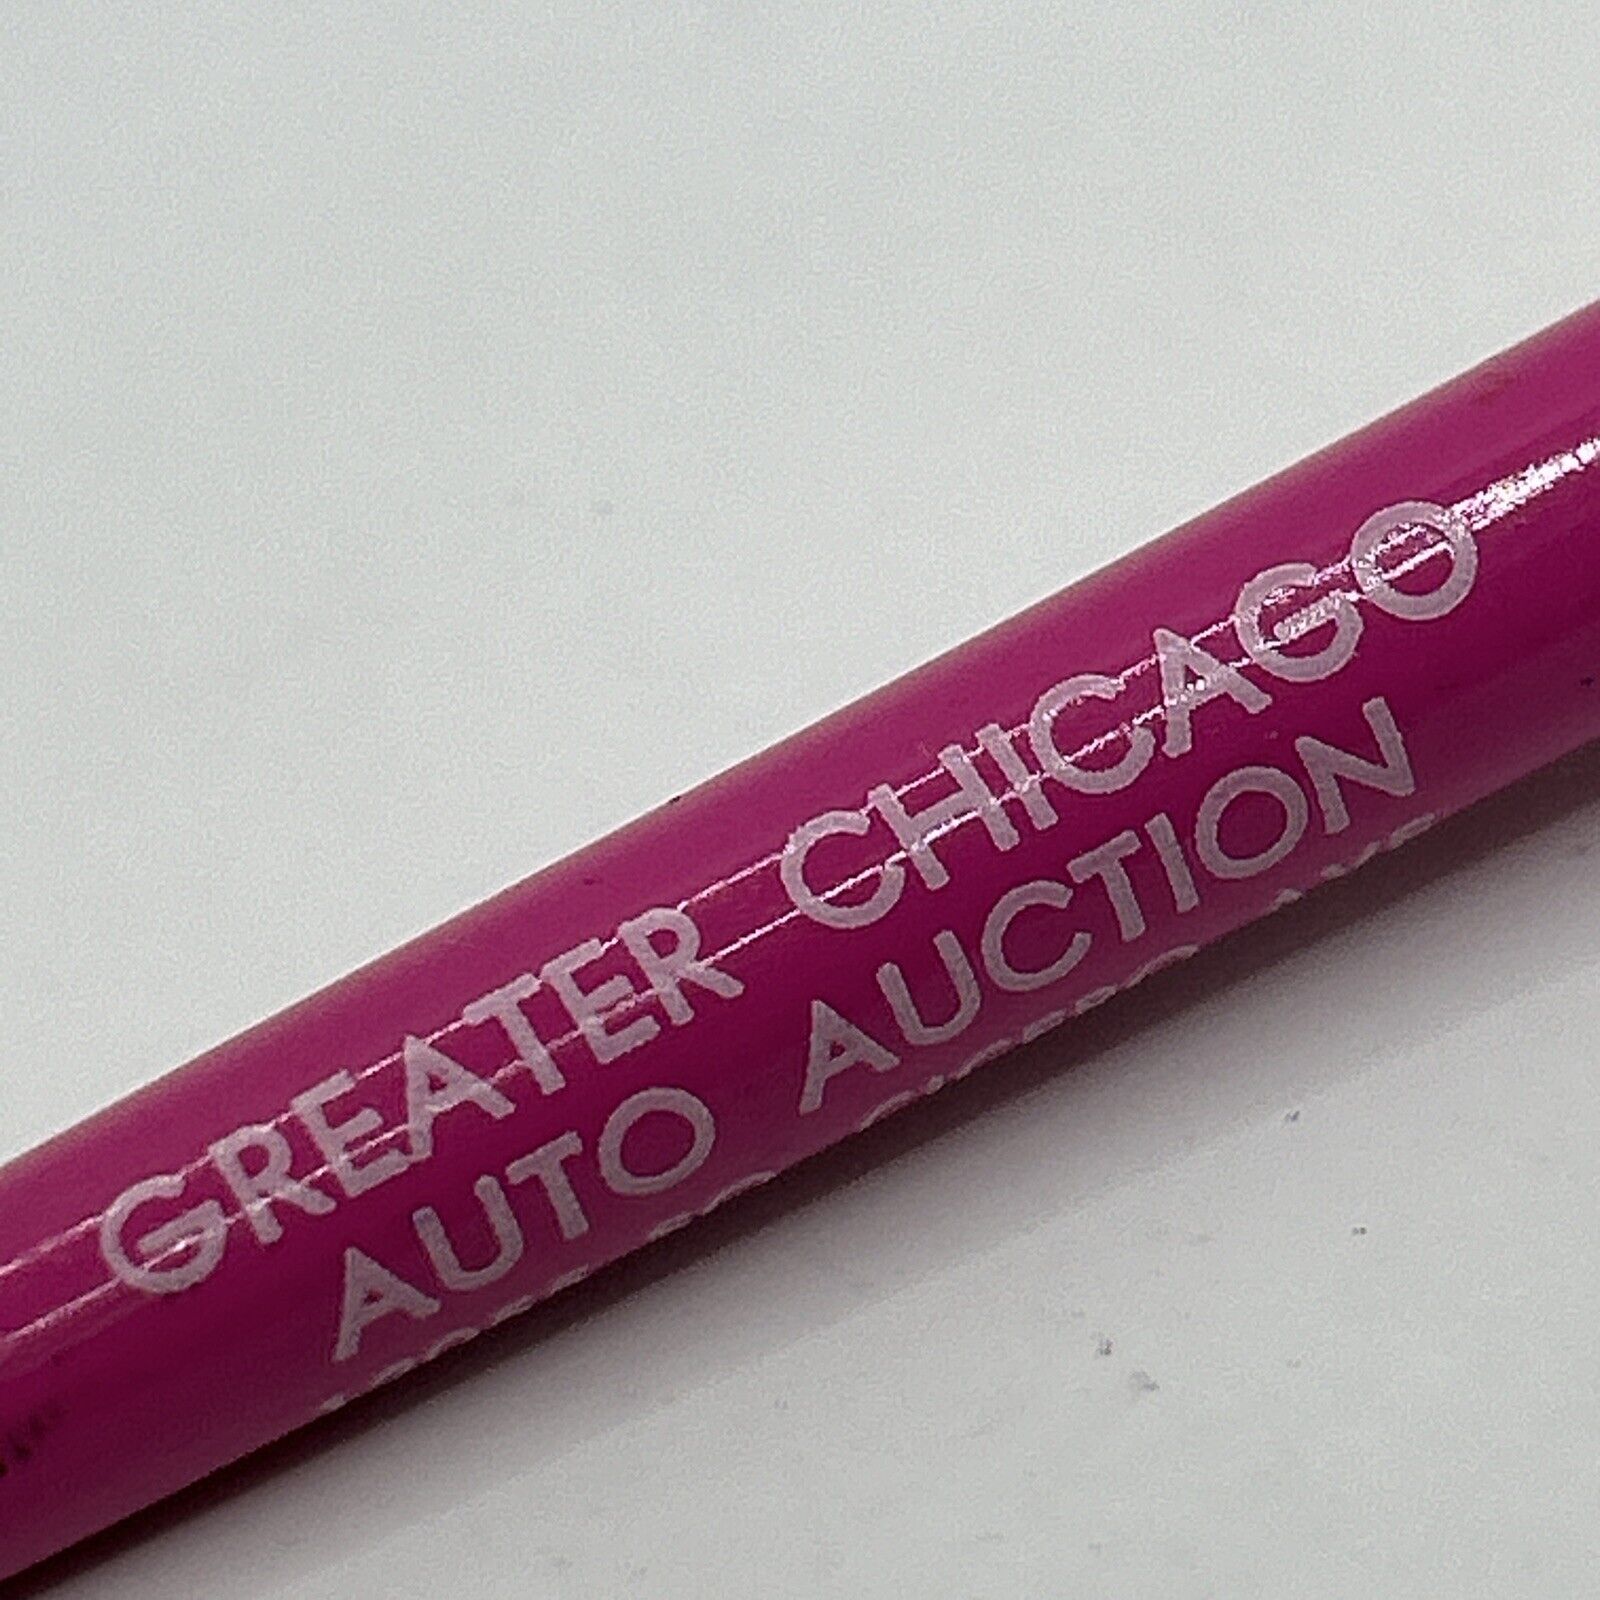 VTG c1960s/70s Ballpoint Pen Greater Chicago Auto Auction